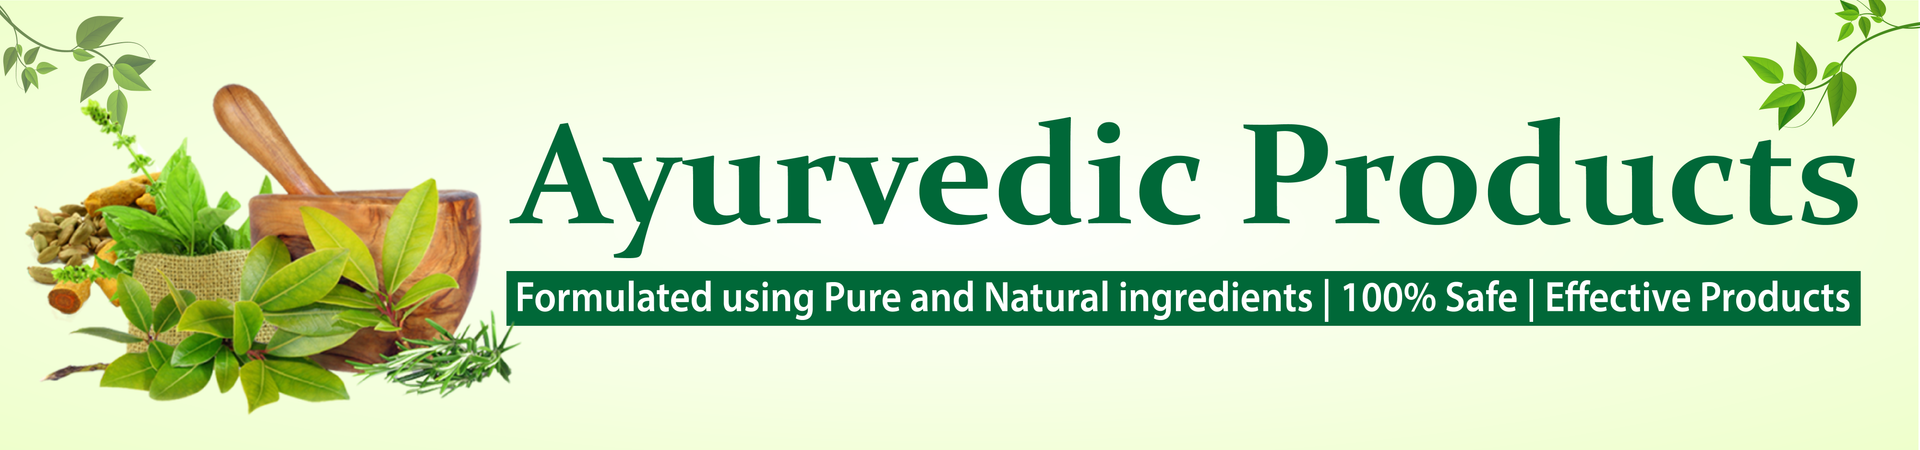 Ayurvedic Medicine and Products